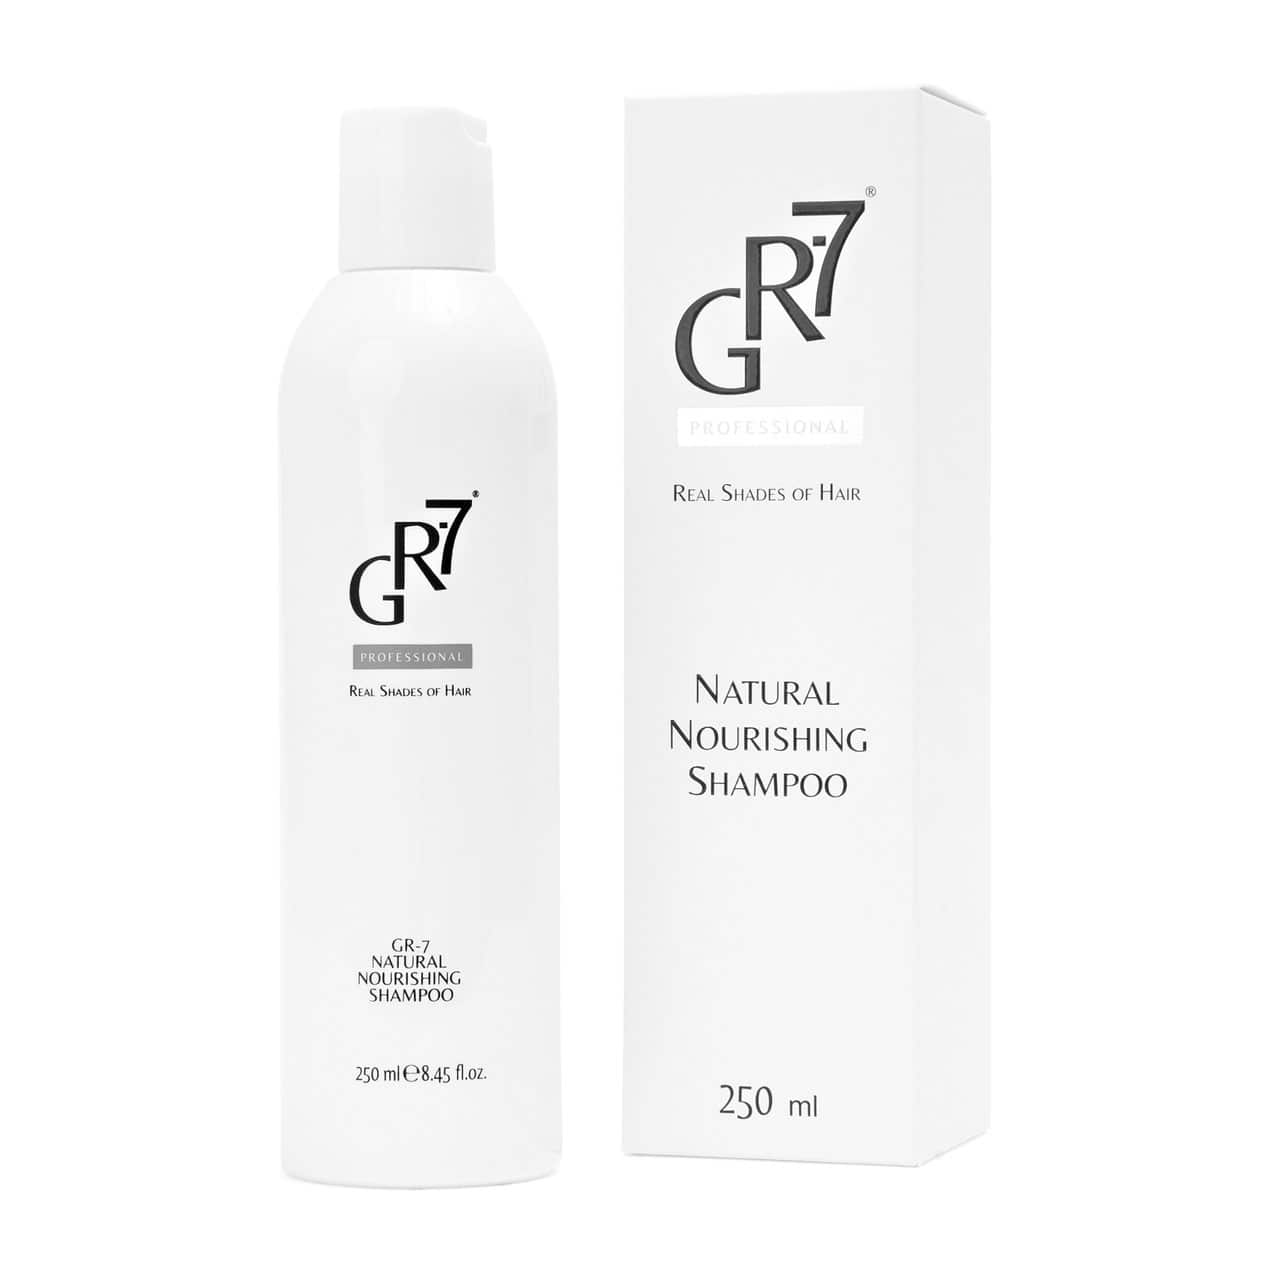 GR-7 Professional Natural Nourishing Shampoo